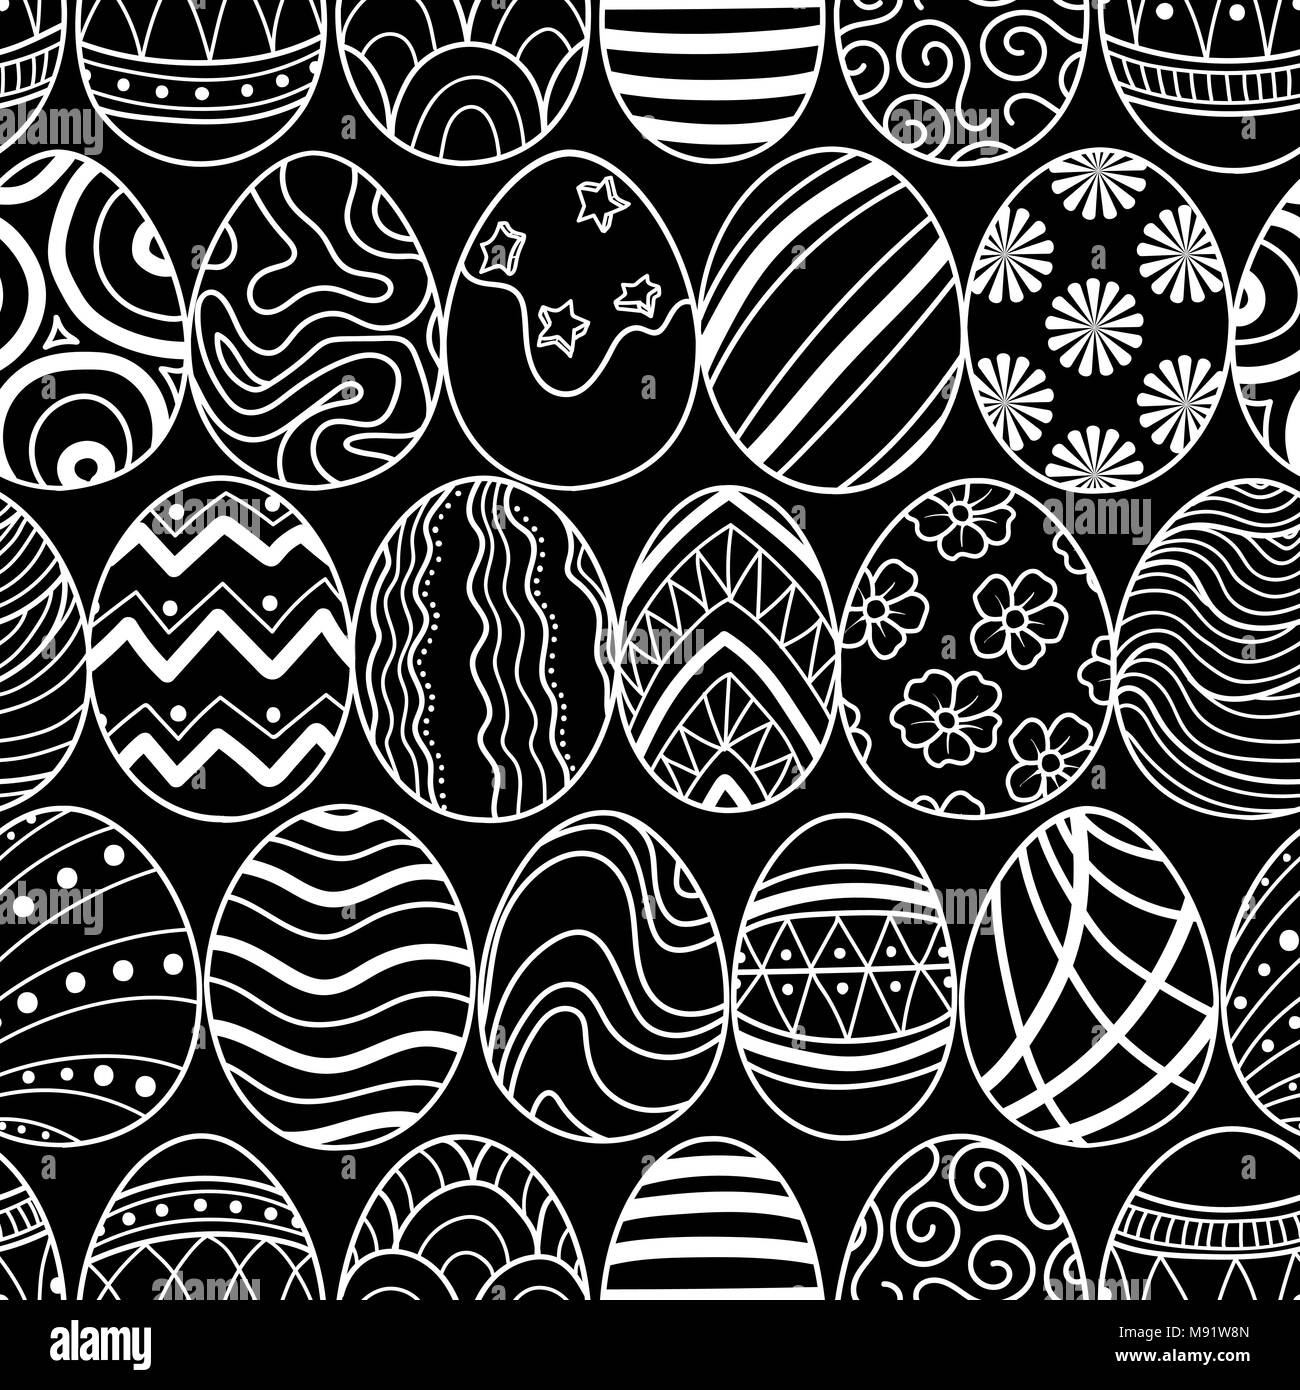 Easter eggs in white outline line up on black ackground. Cute hand drawn seamless pattern design for Easter festival in vector illustration. Stock Vector